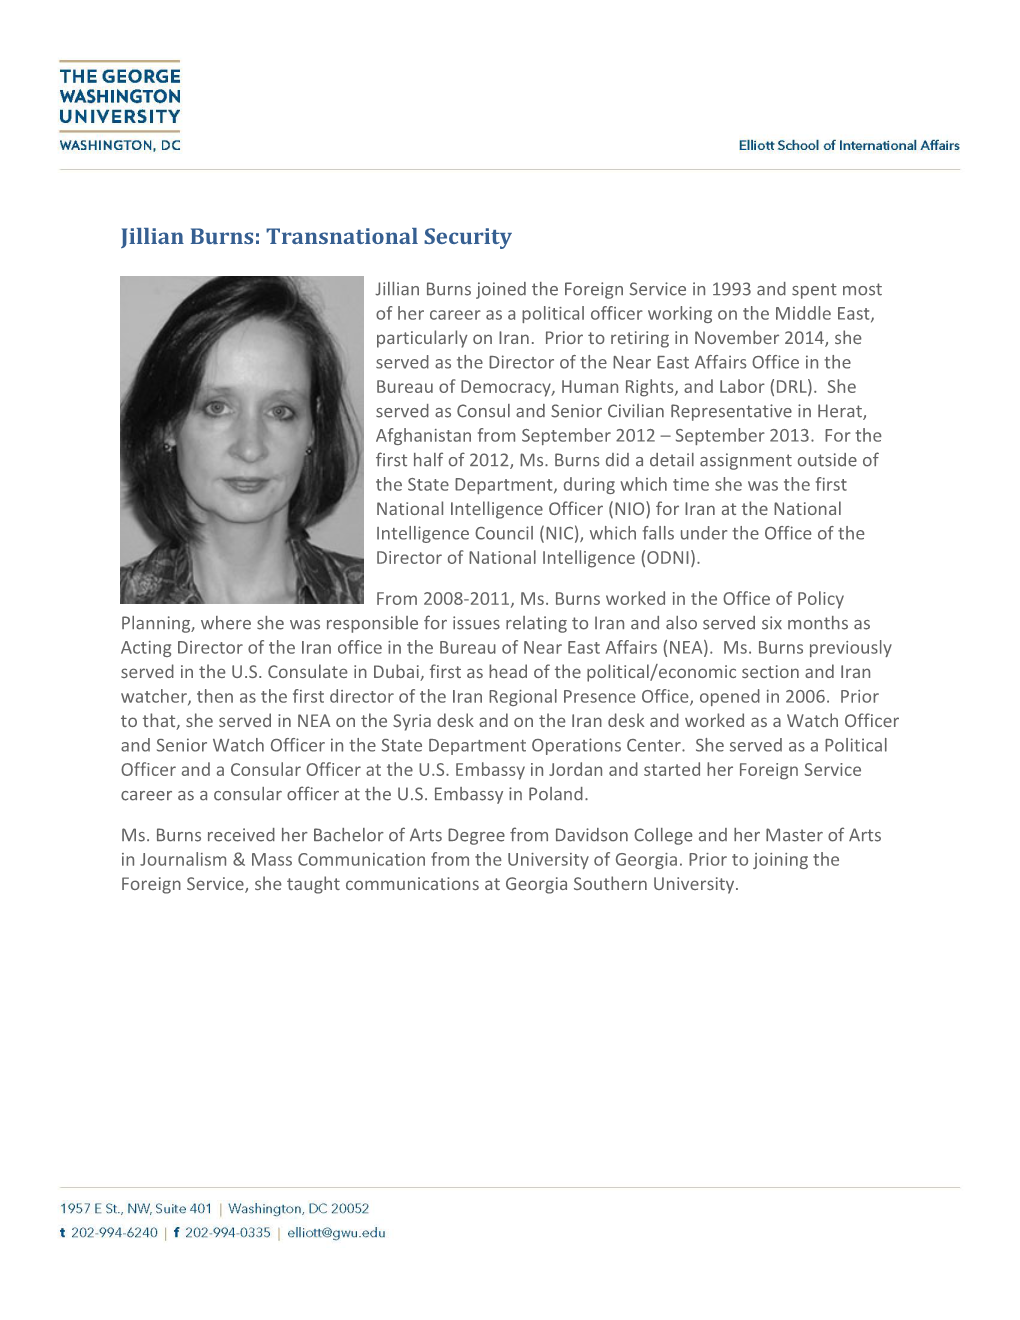 Jillian Burns: Transnational Security